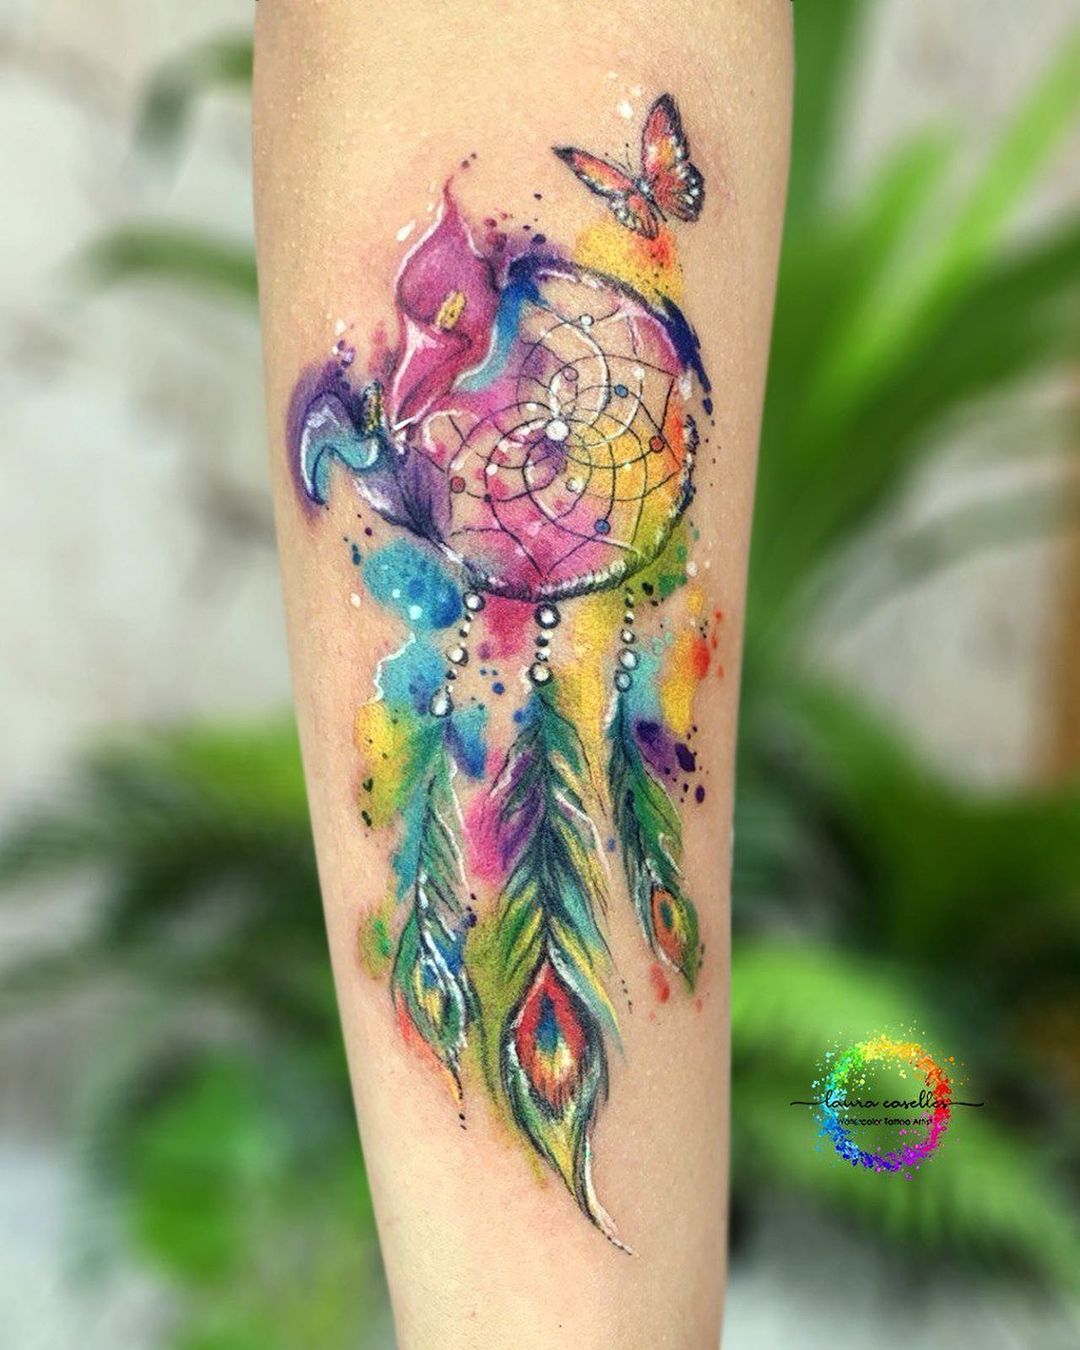 678 Dream Catcher Watercolor Tattoo Images Stock Photos  Vectors   Shutterstock